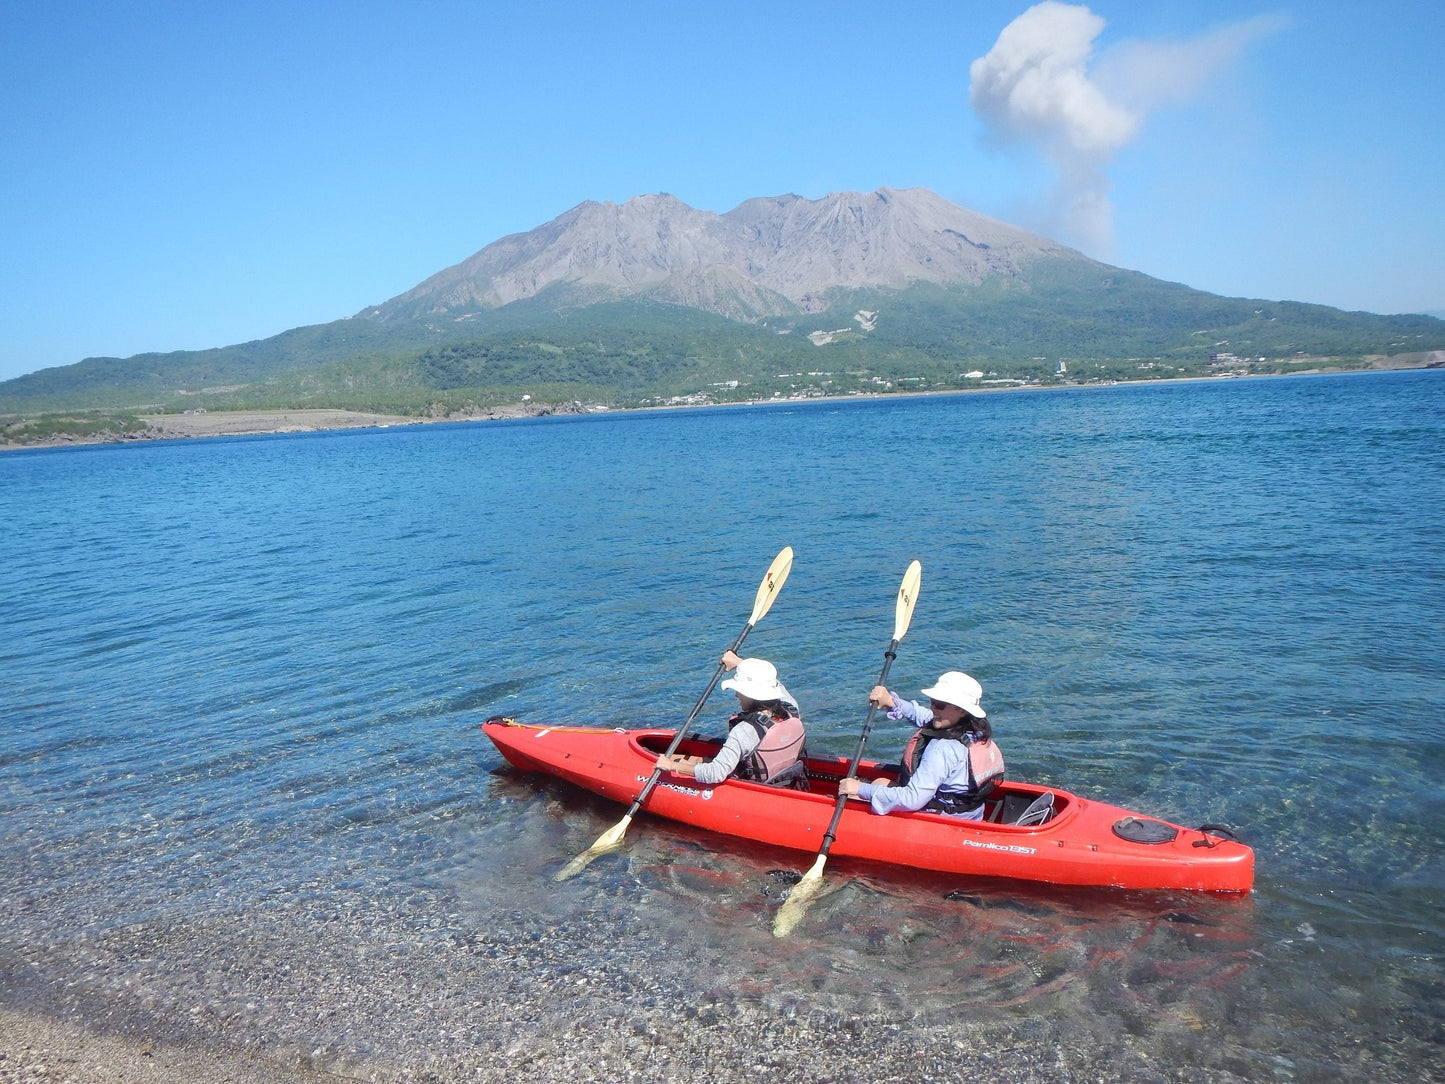 Kayaking along active volcano “Sakurajima”